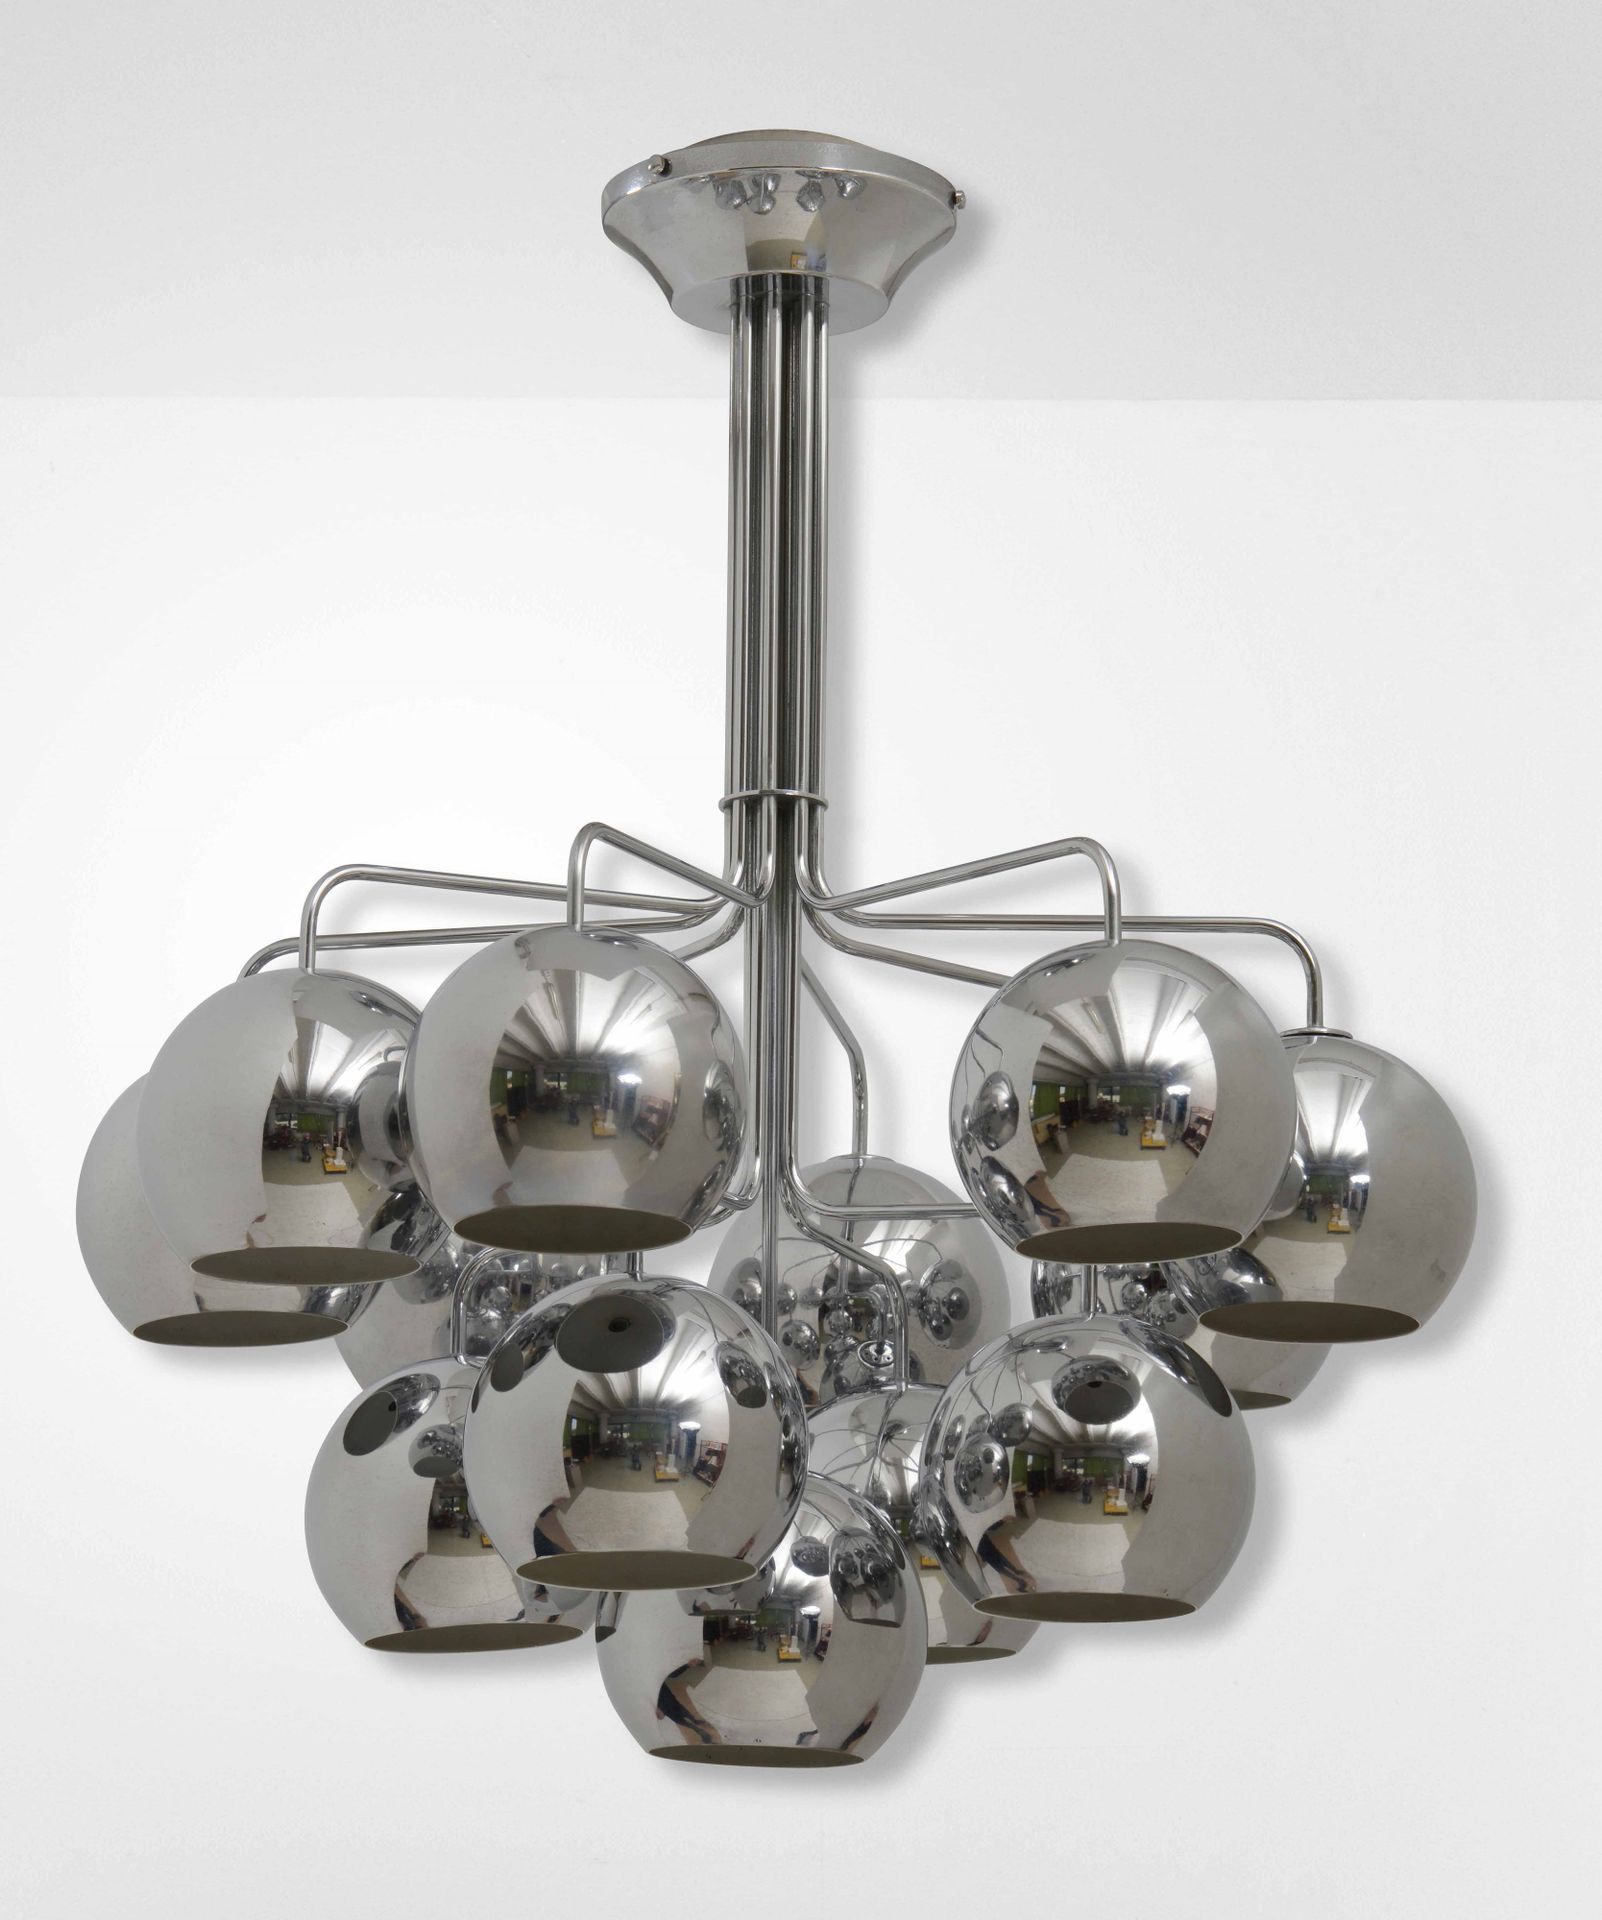 Candle, 吊灯，镀铬金属结构和扩散器。意大利制造，1970年，约cm 90x100